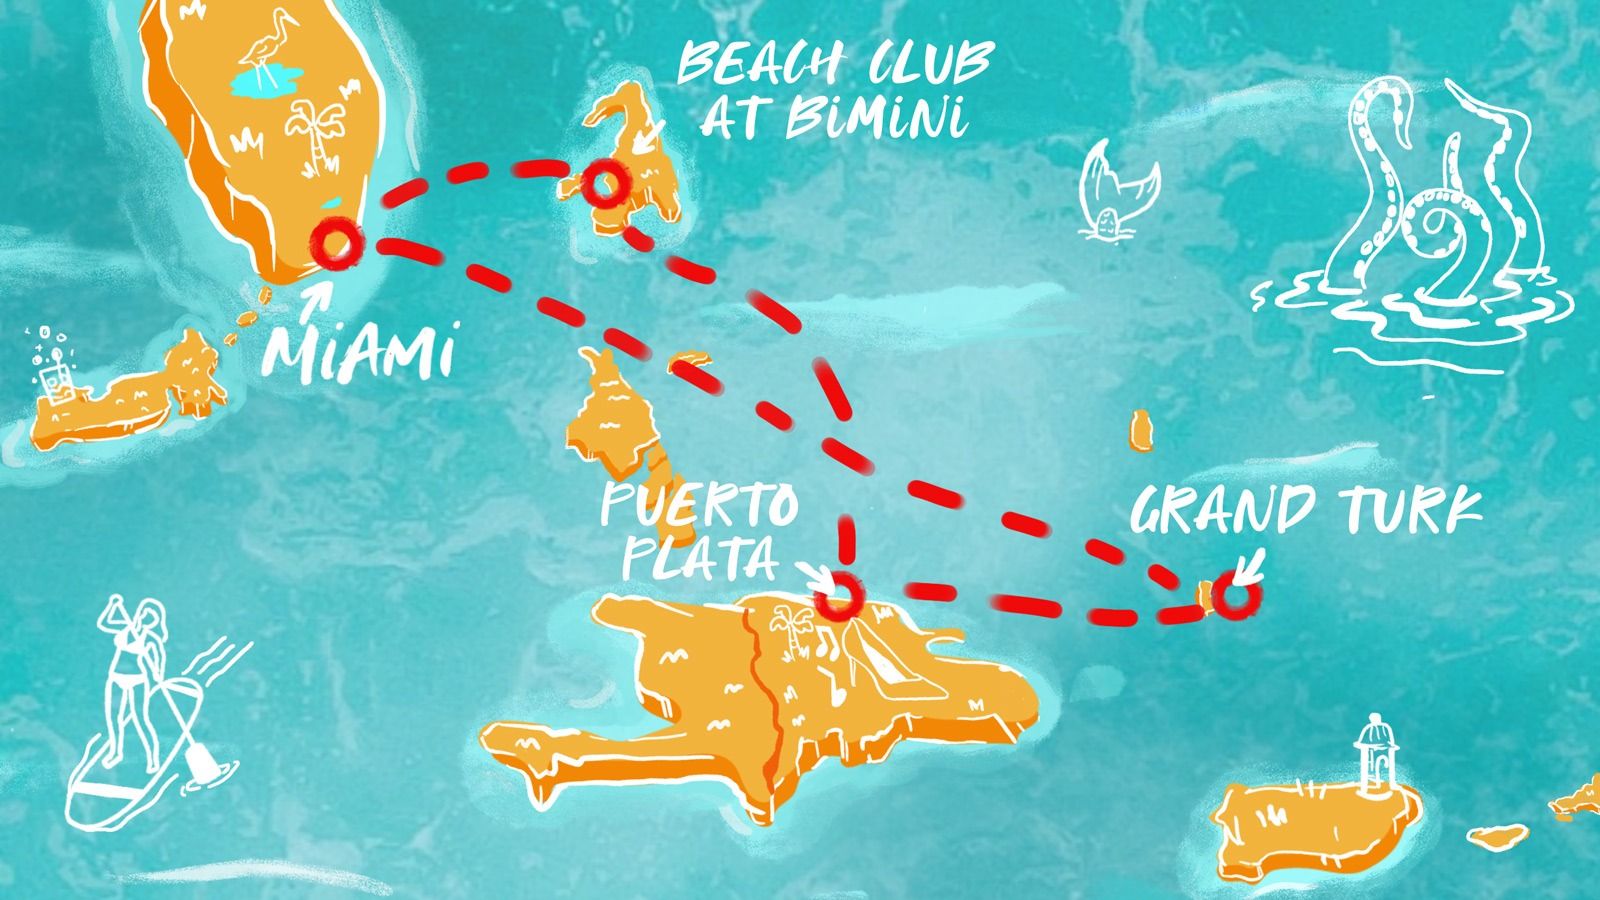 Grand Turk, Puerto Plata & Bimini Itinerary Map